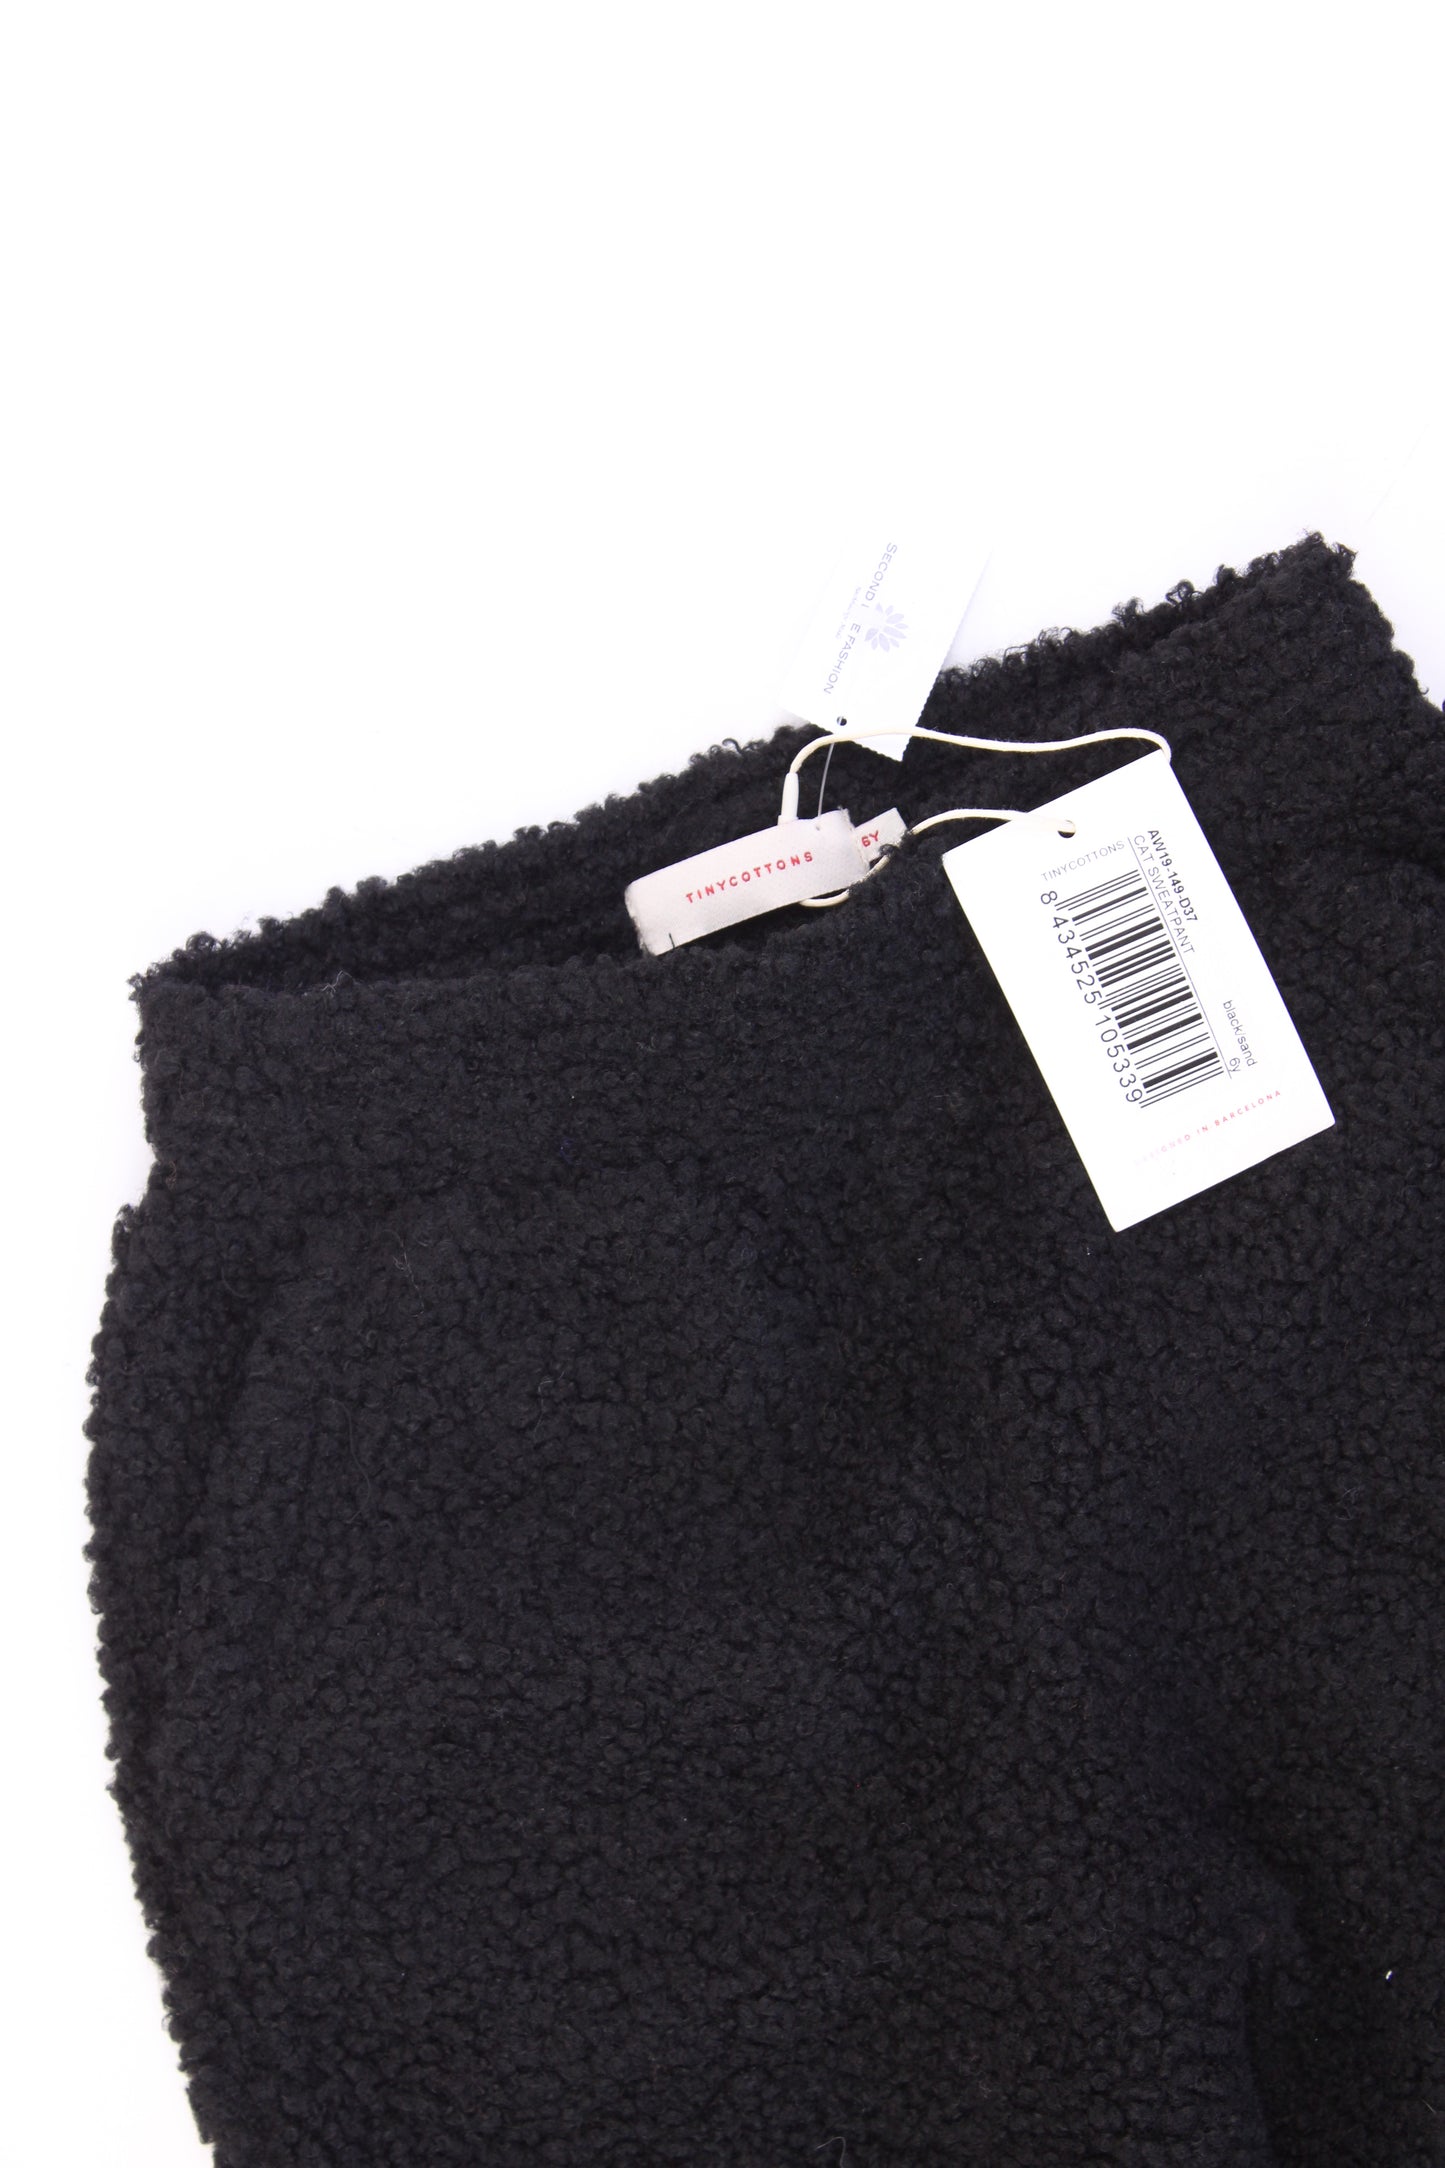 Tiny Cottons Cat Sweatpants Kinder Jogginghose schwarz Größe 6 Jahre neu mit Etikett